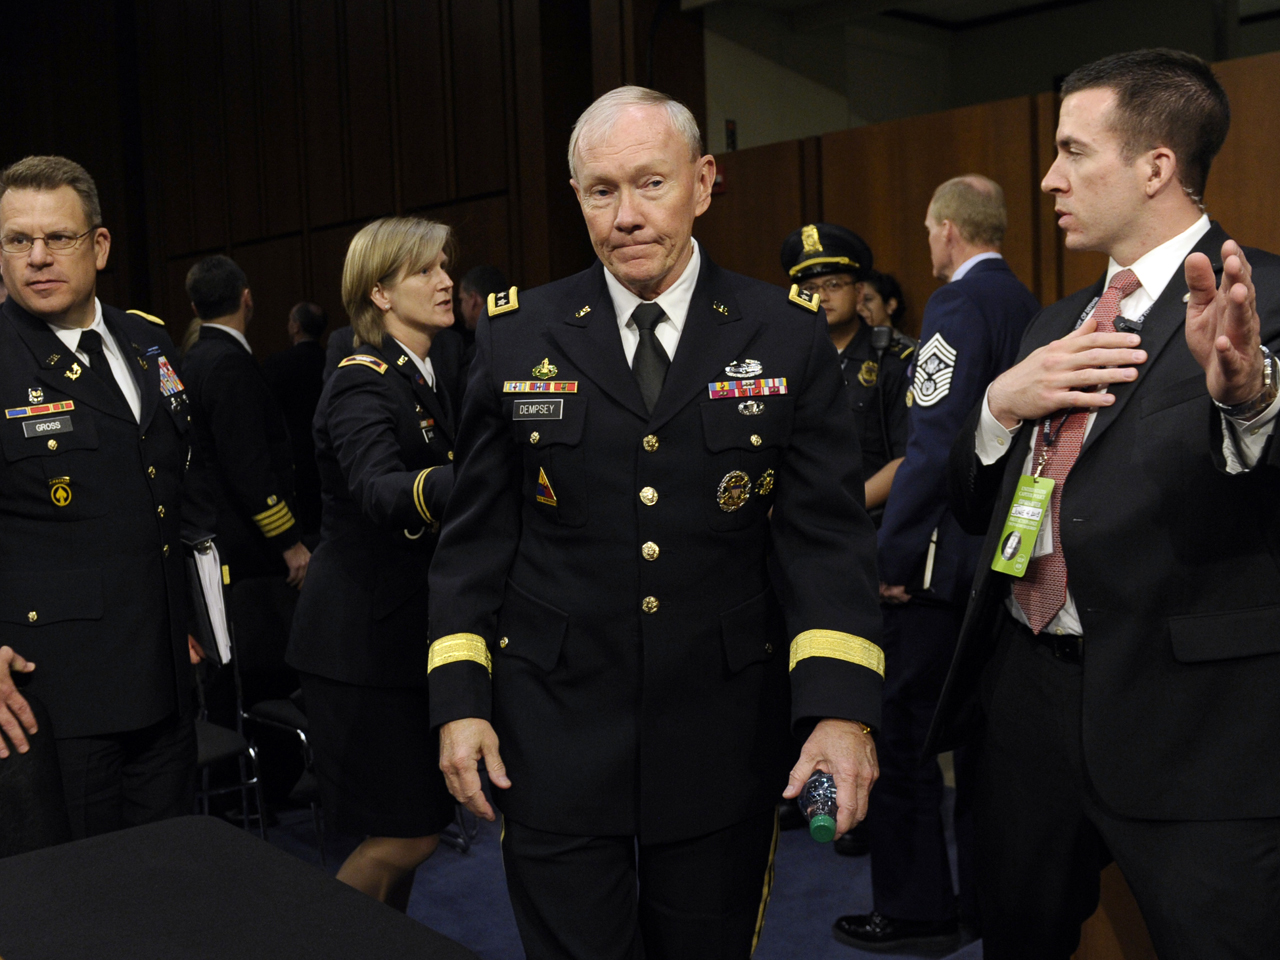 Military's top brass prep measures to combat sexual assault - CBS News